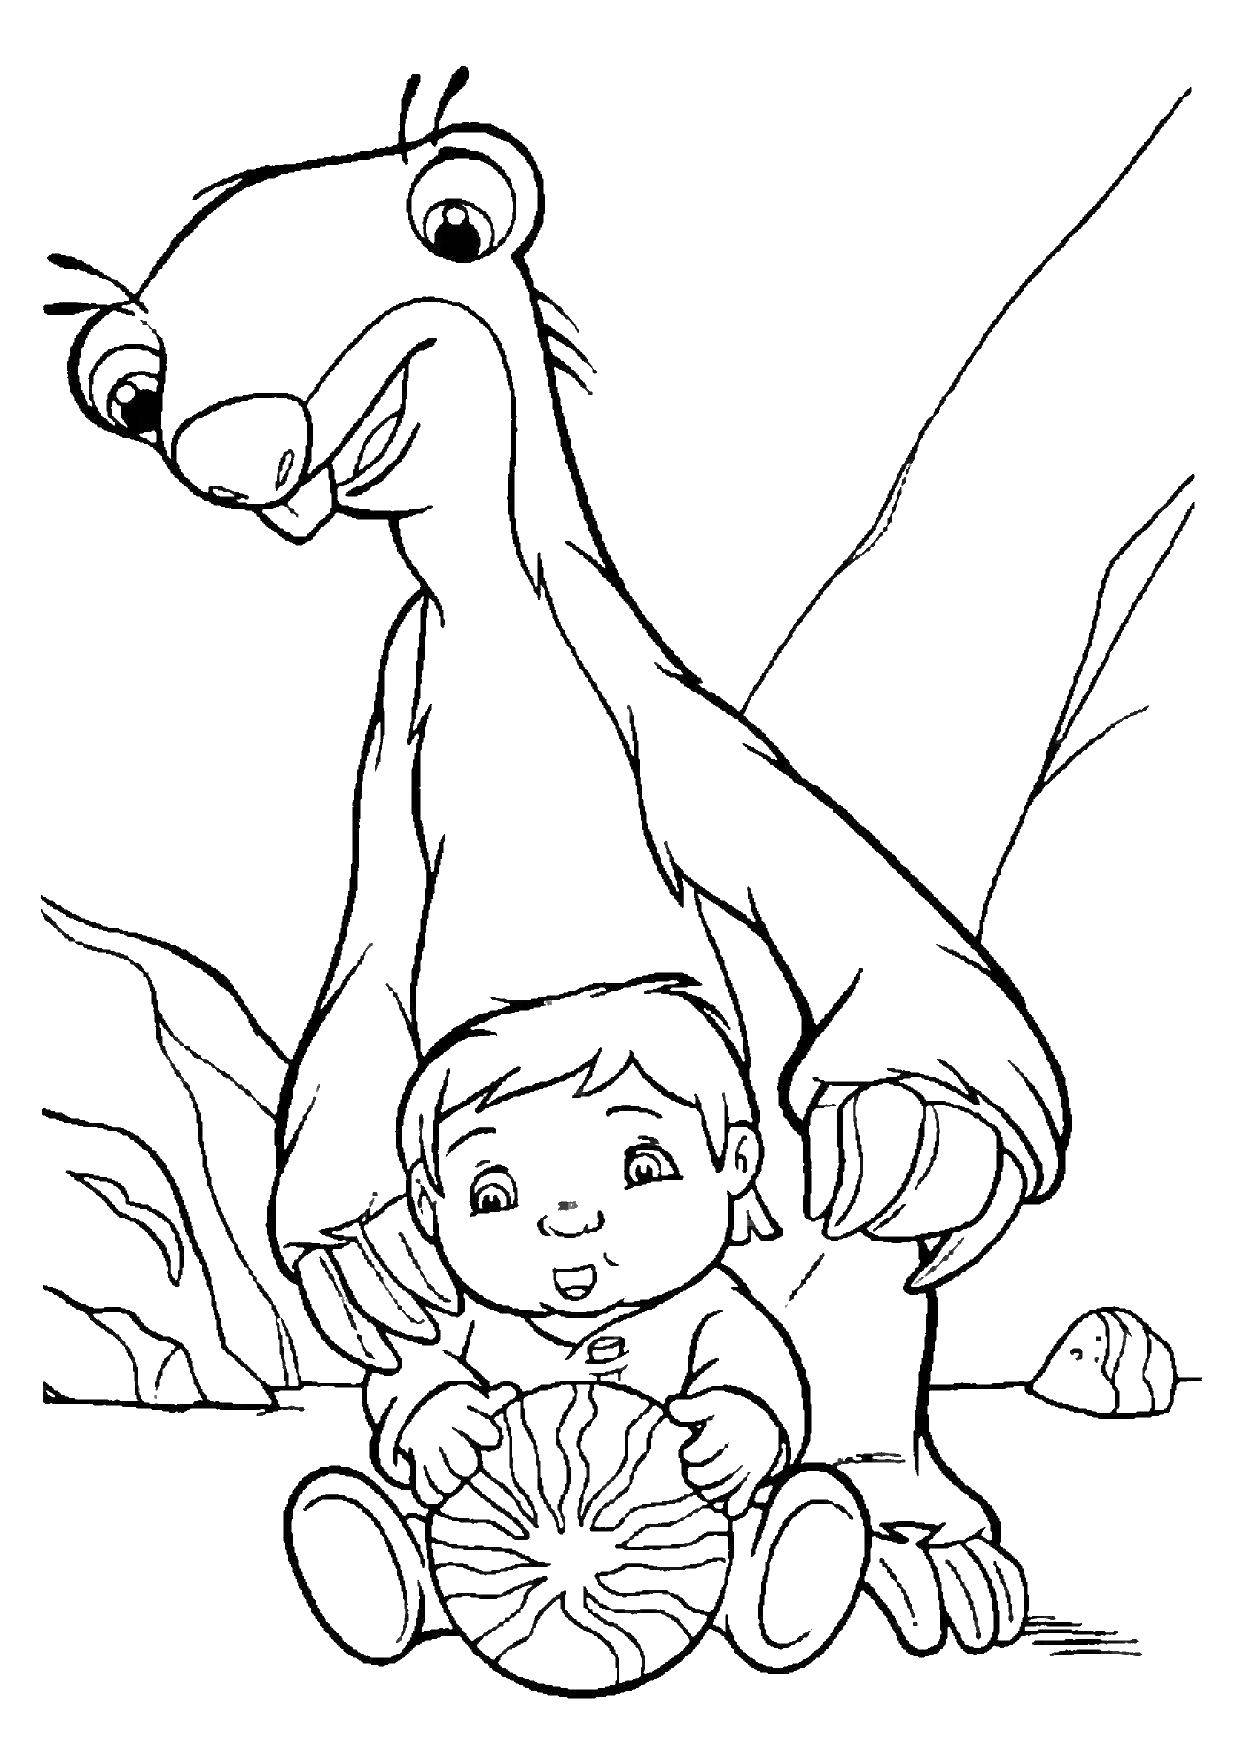 Название: Раскраска Сид и ребенок. Категория: ледниковый период. Теги: сид, ребенок, мяч.